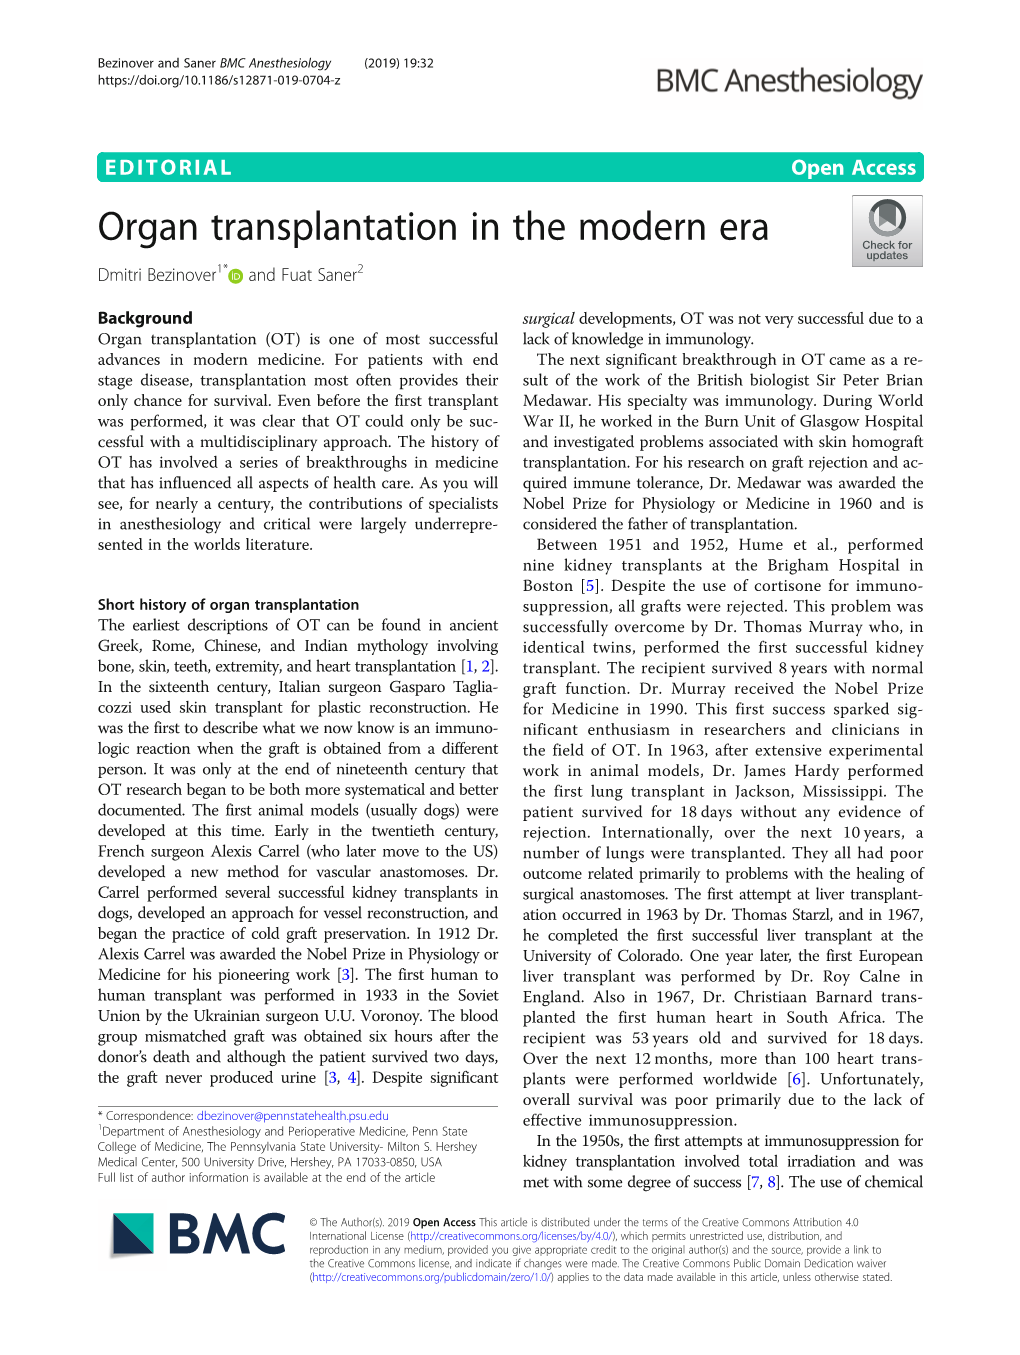 Organ Transplantation in the Modern Era Dmitri Bezinover1* and Fuat Saner2